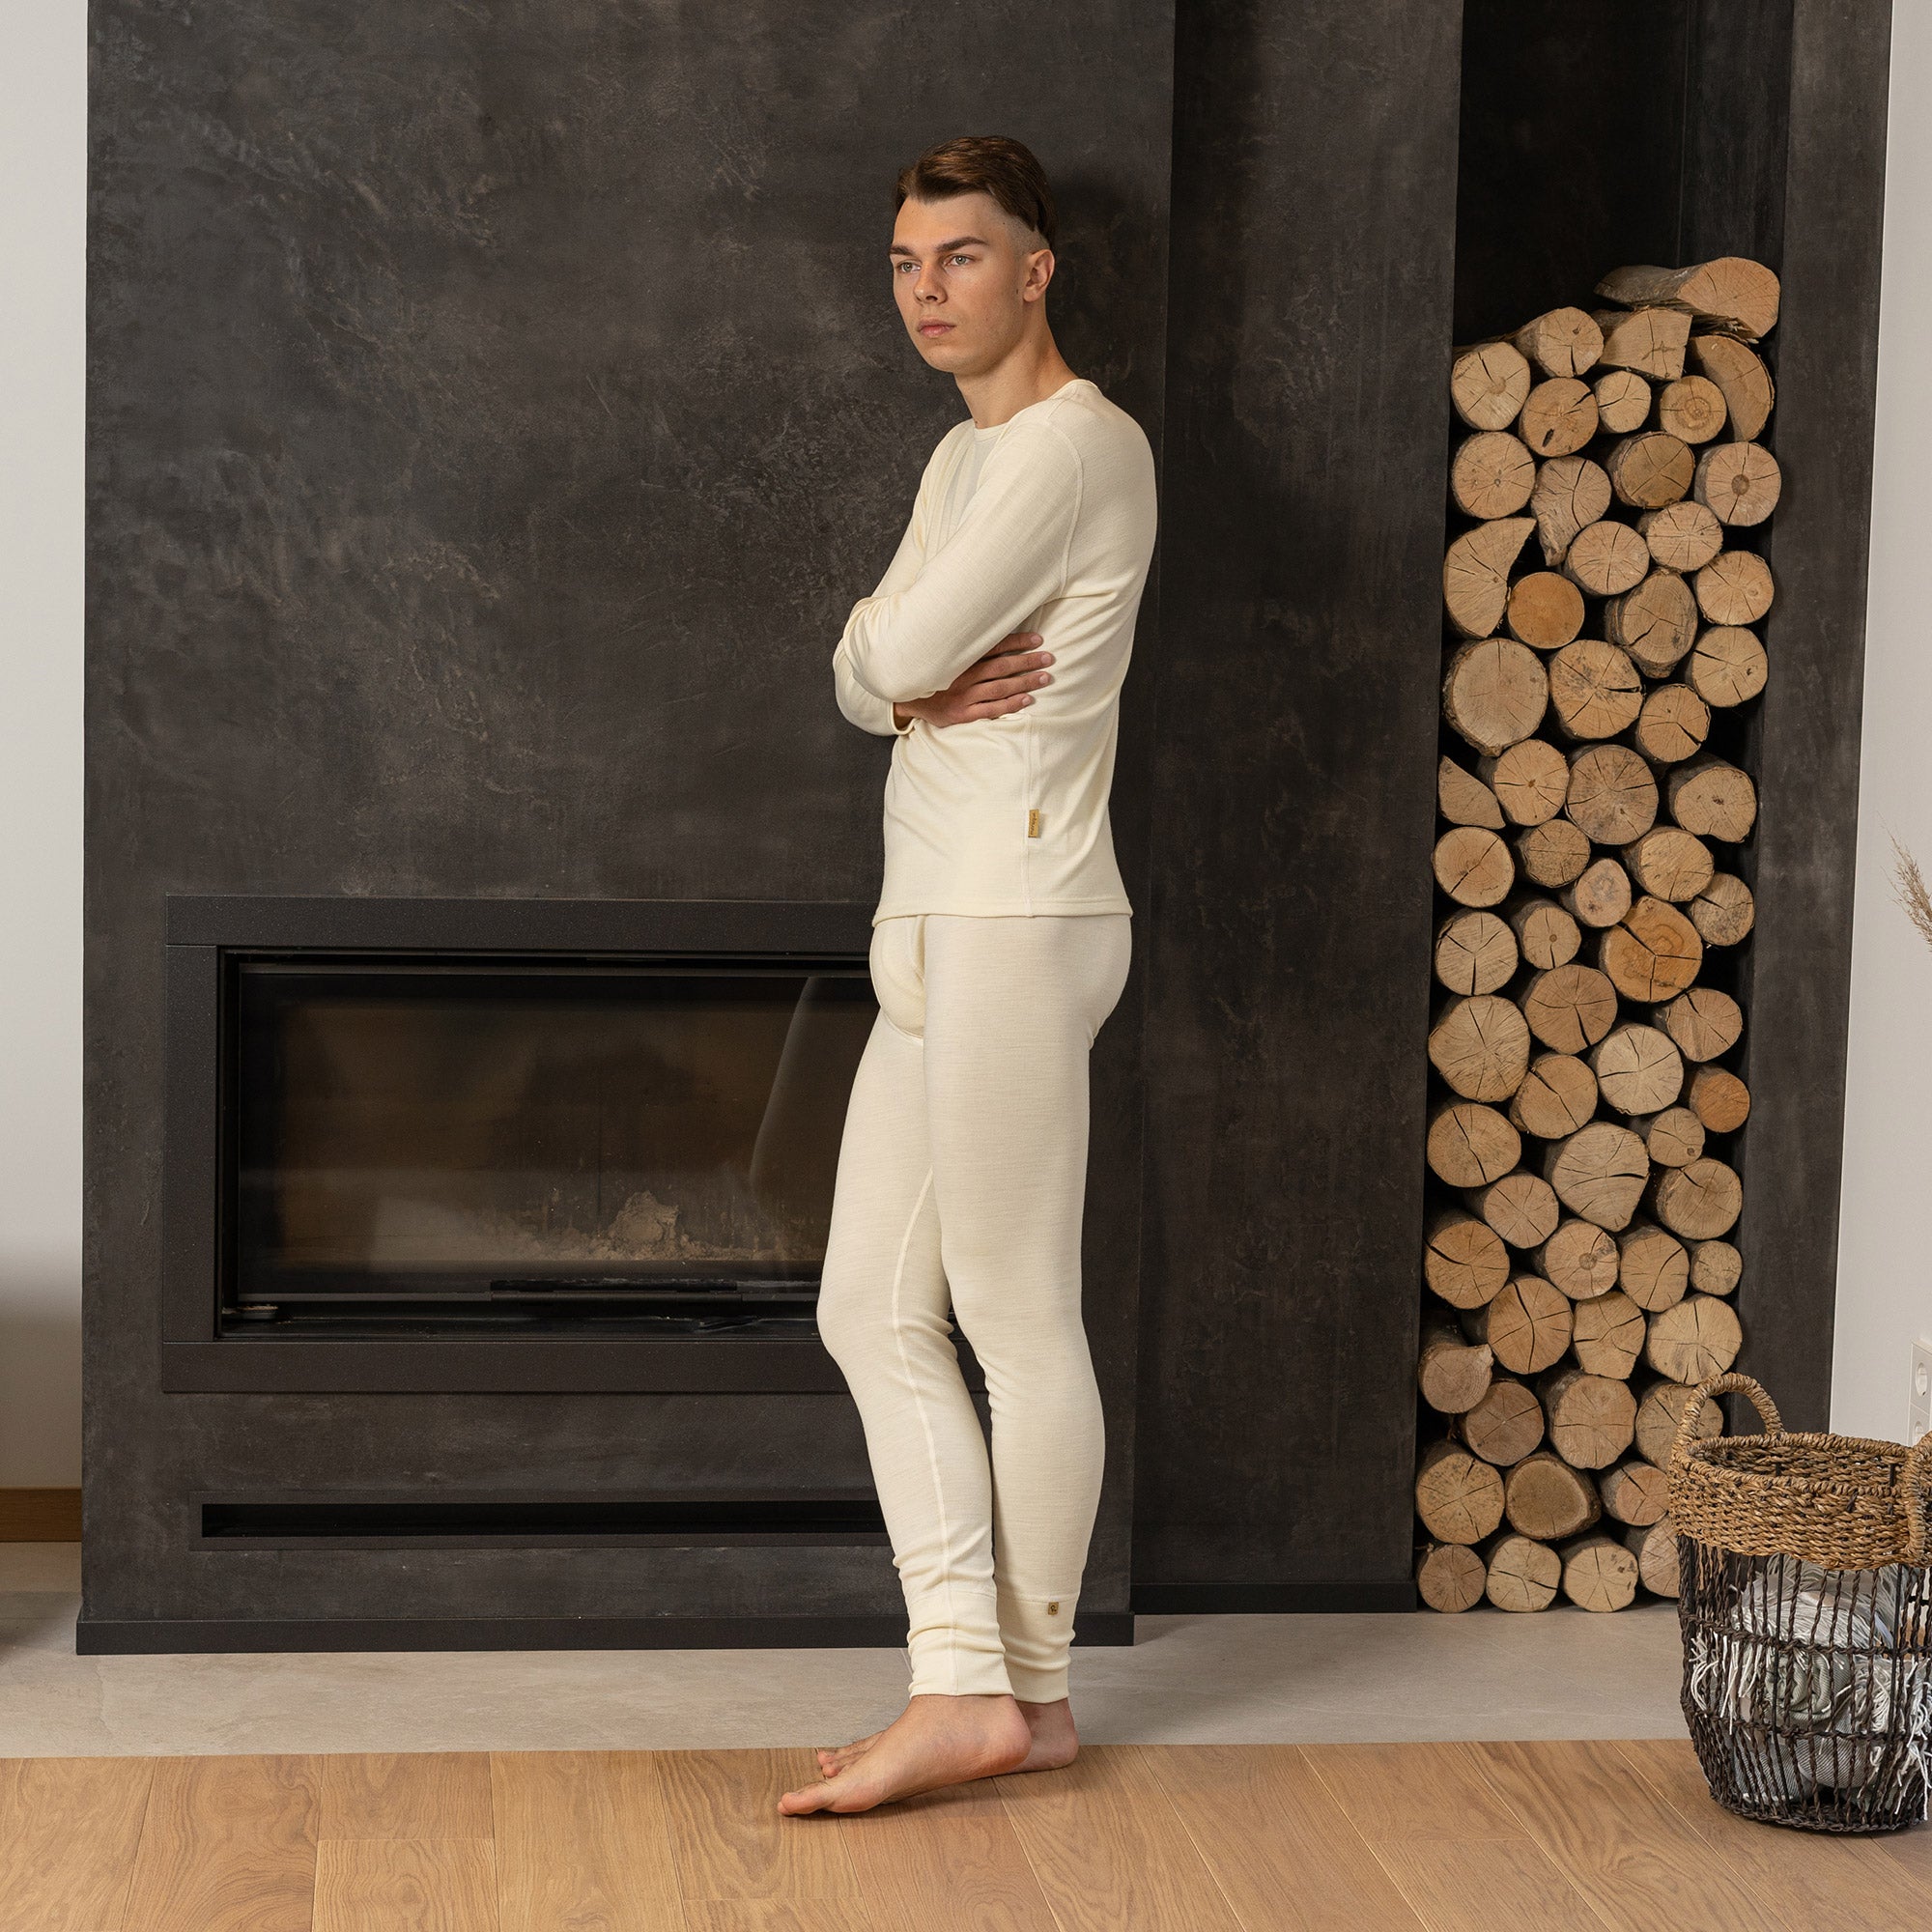 Natural Merino Wool Leggings for Men - Winter Long Johns - Thermal Underwear